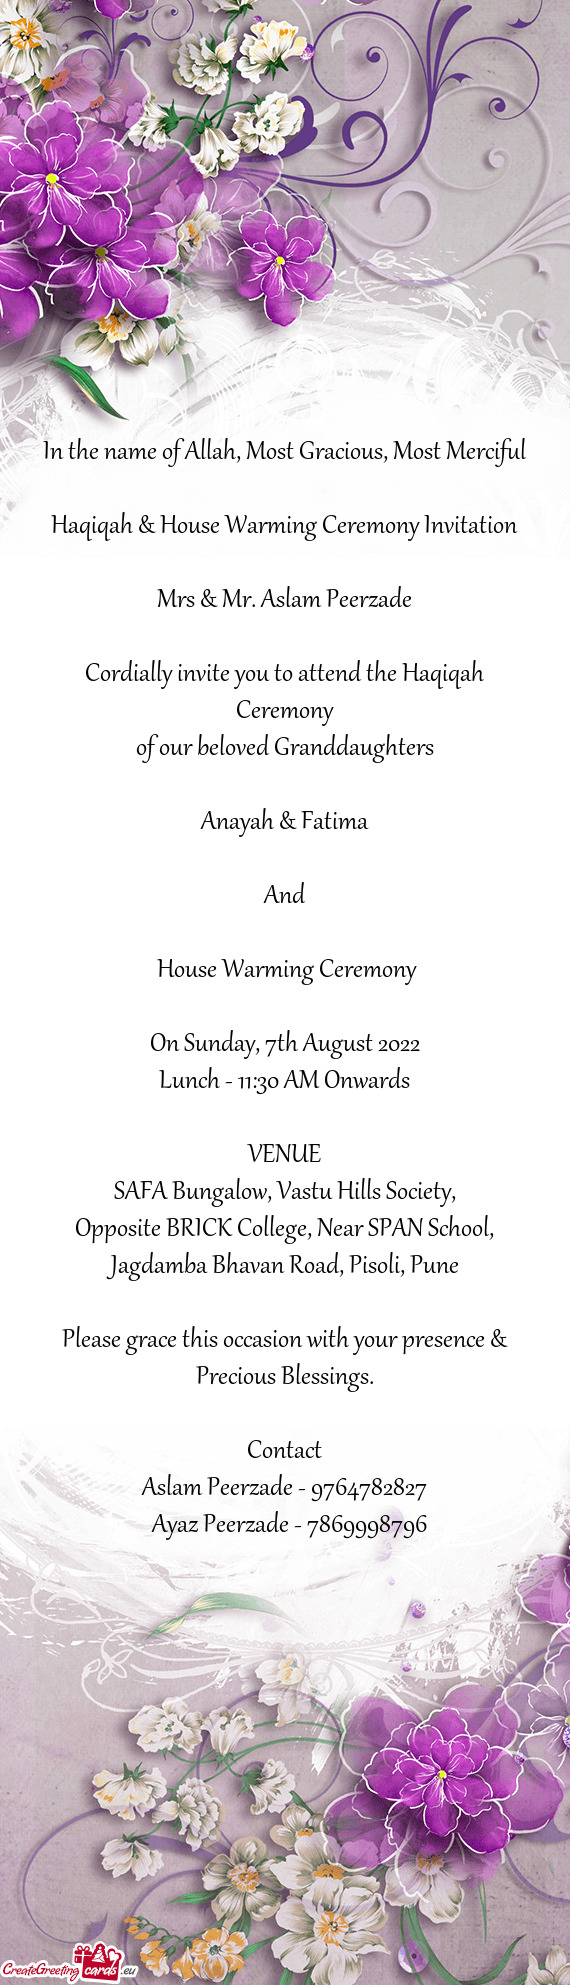 Haqiqah & House Warming Ceremony Invitation